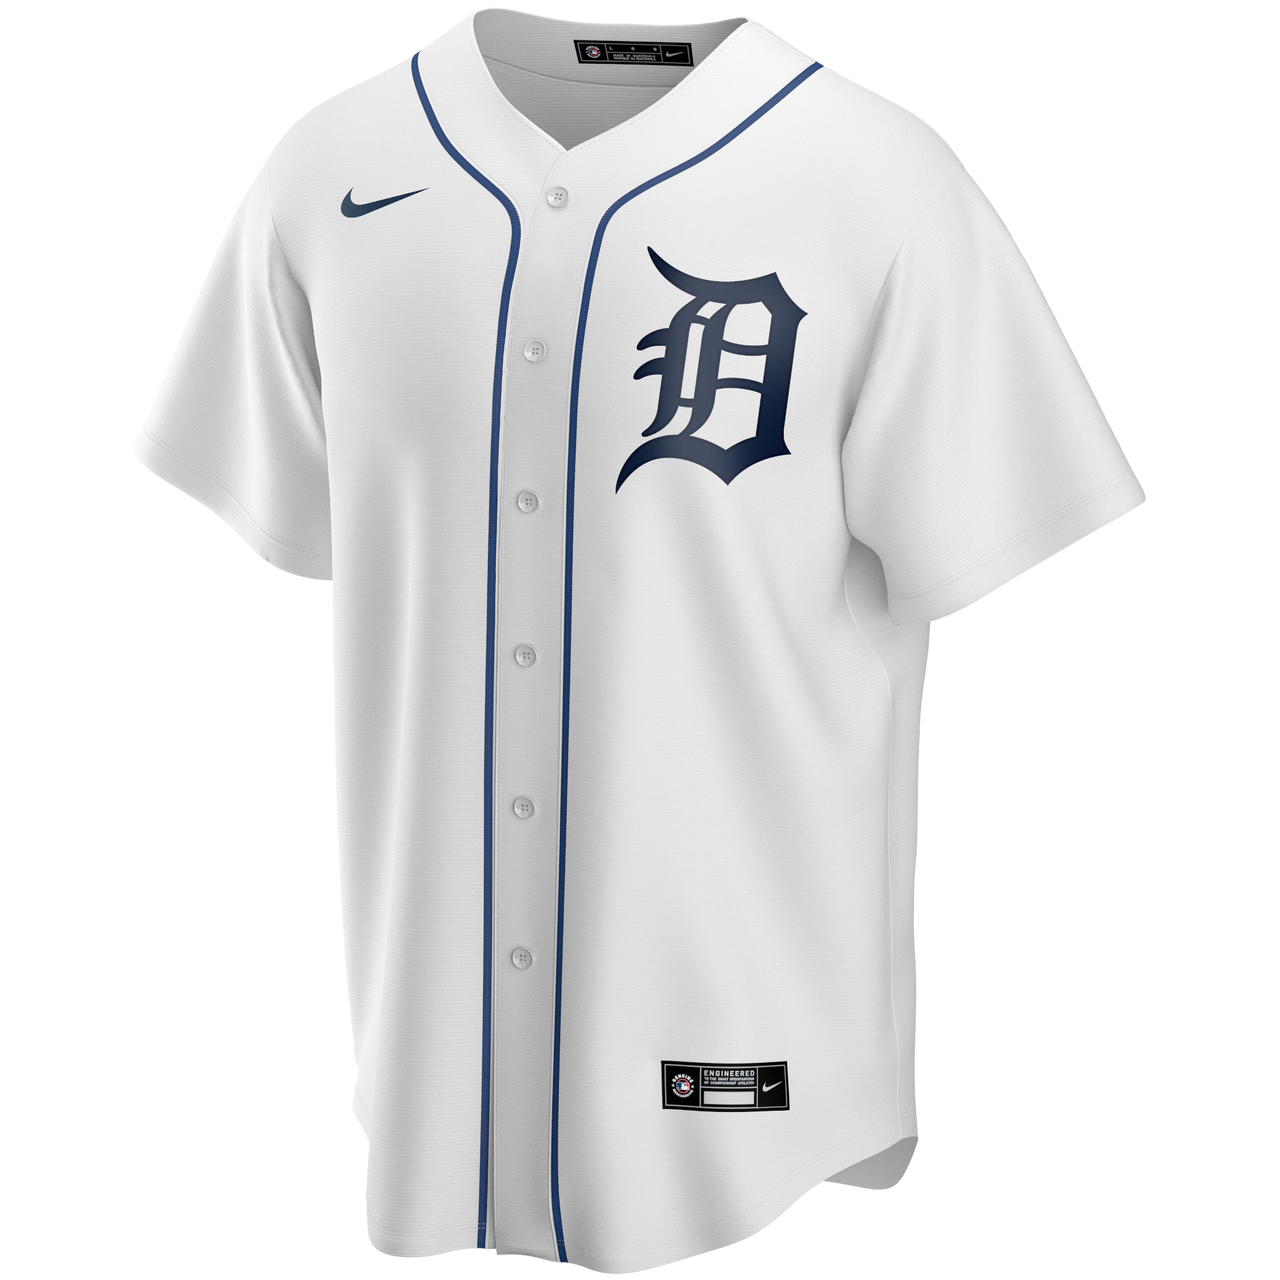 Nike Men's Detroit Tigers White Home Blank Replica Jersey